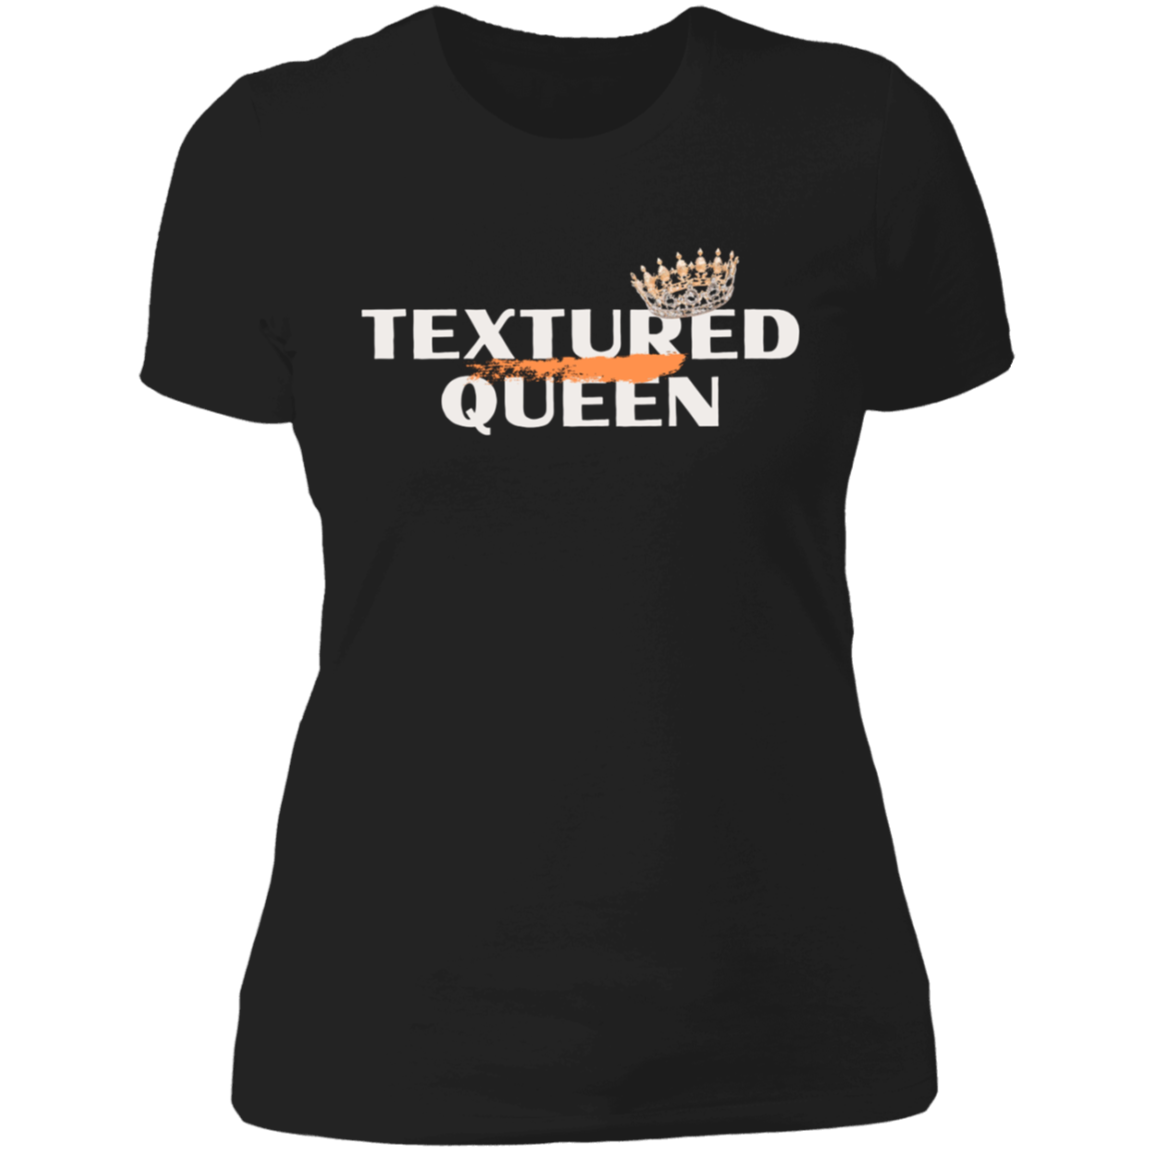 Black Textured Queen Tee with Gold Tiara